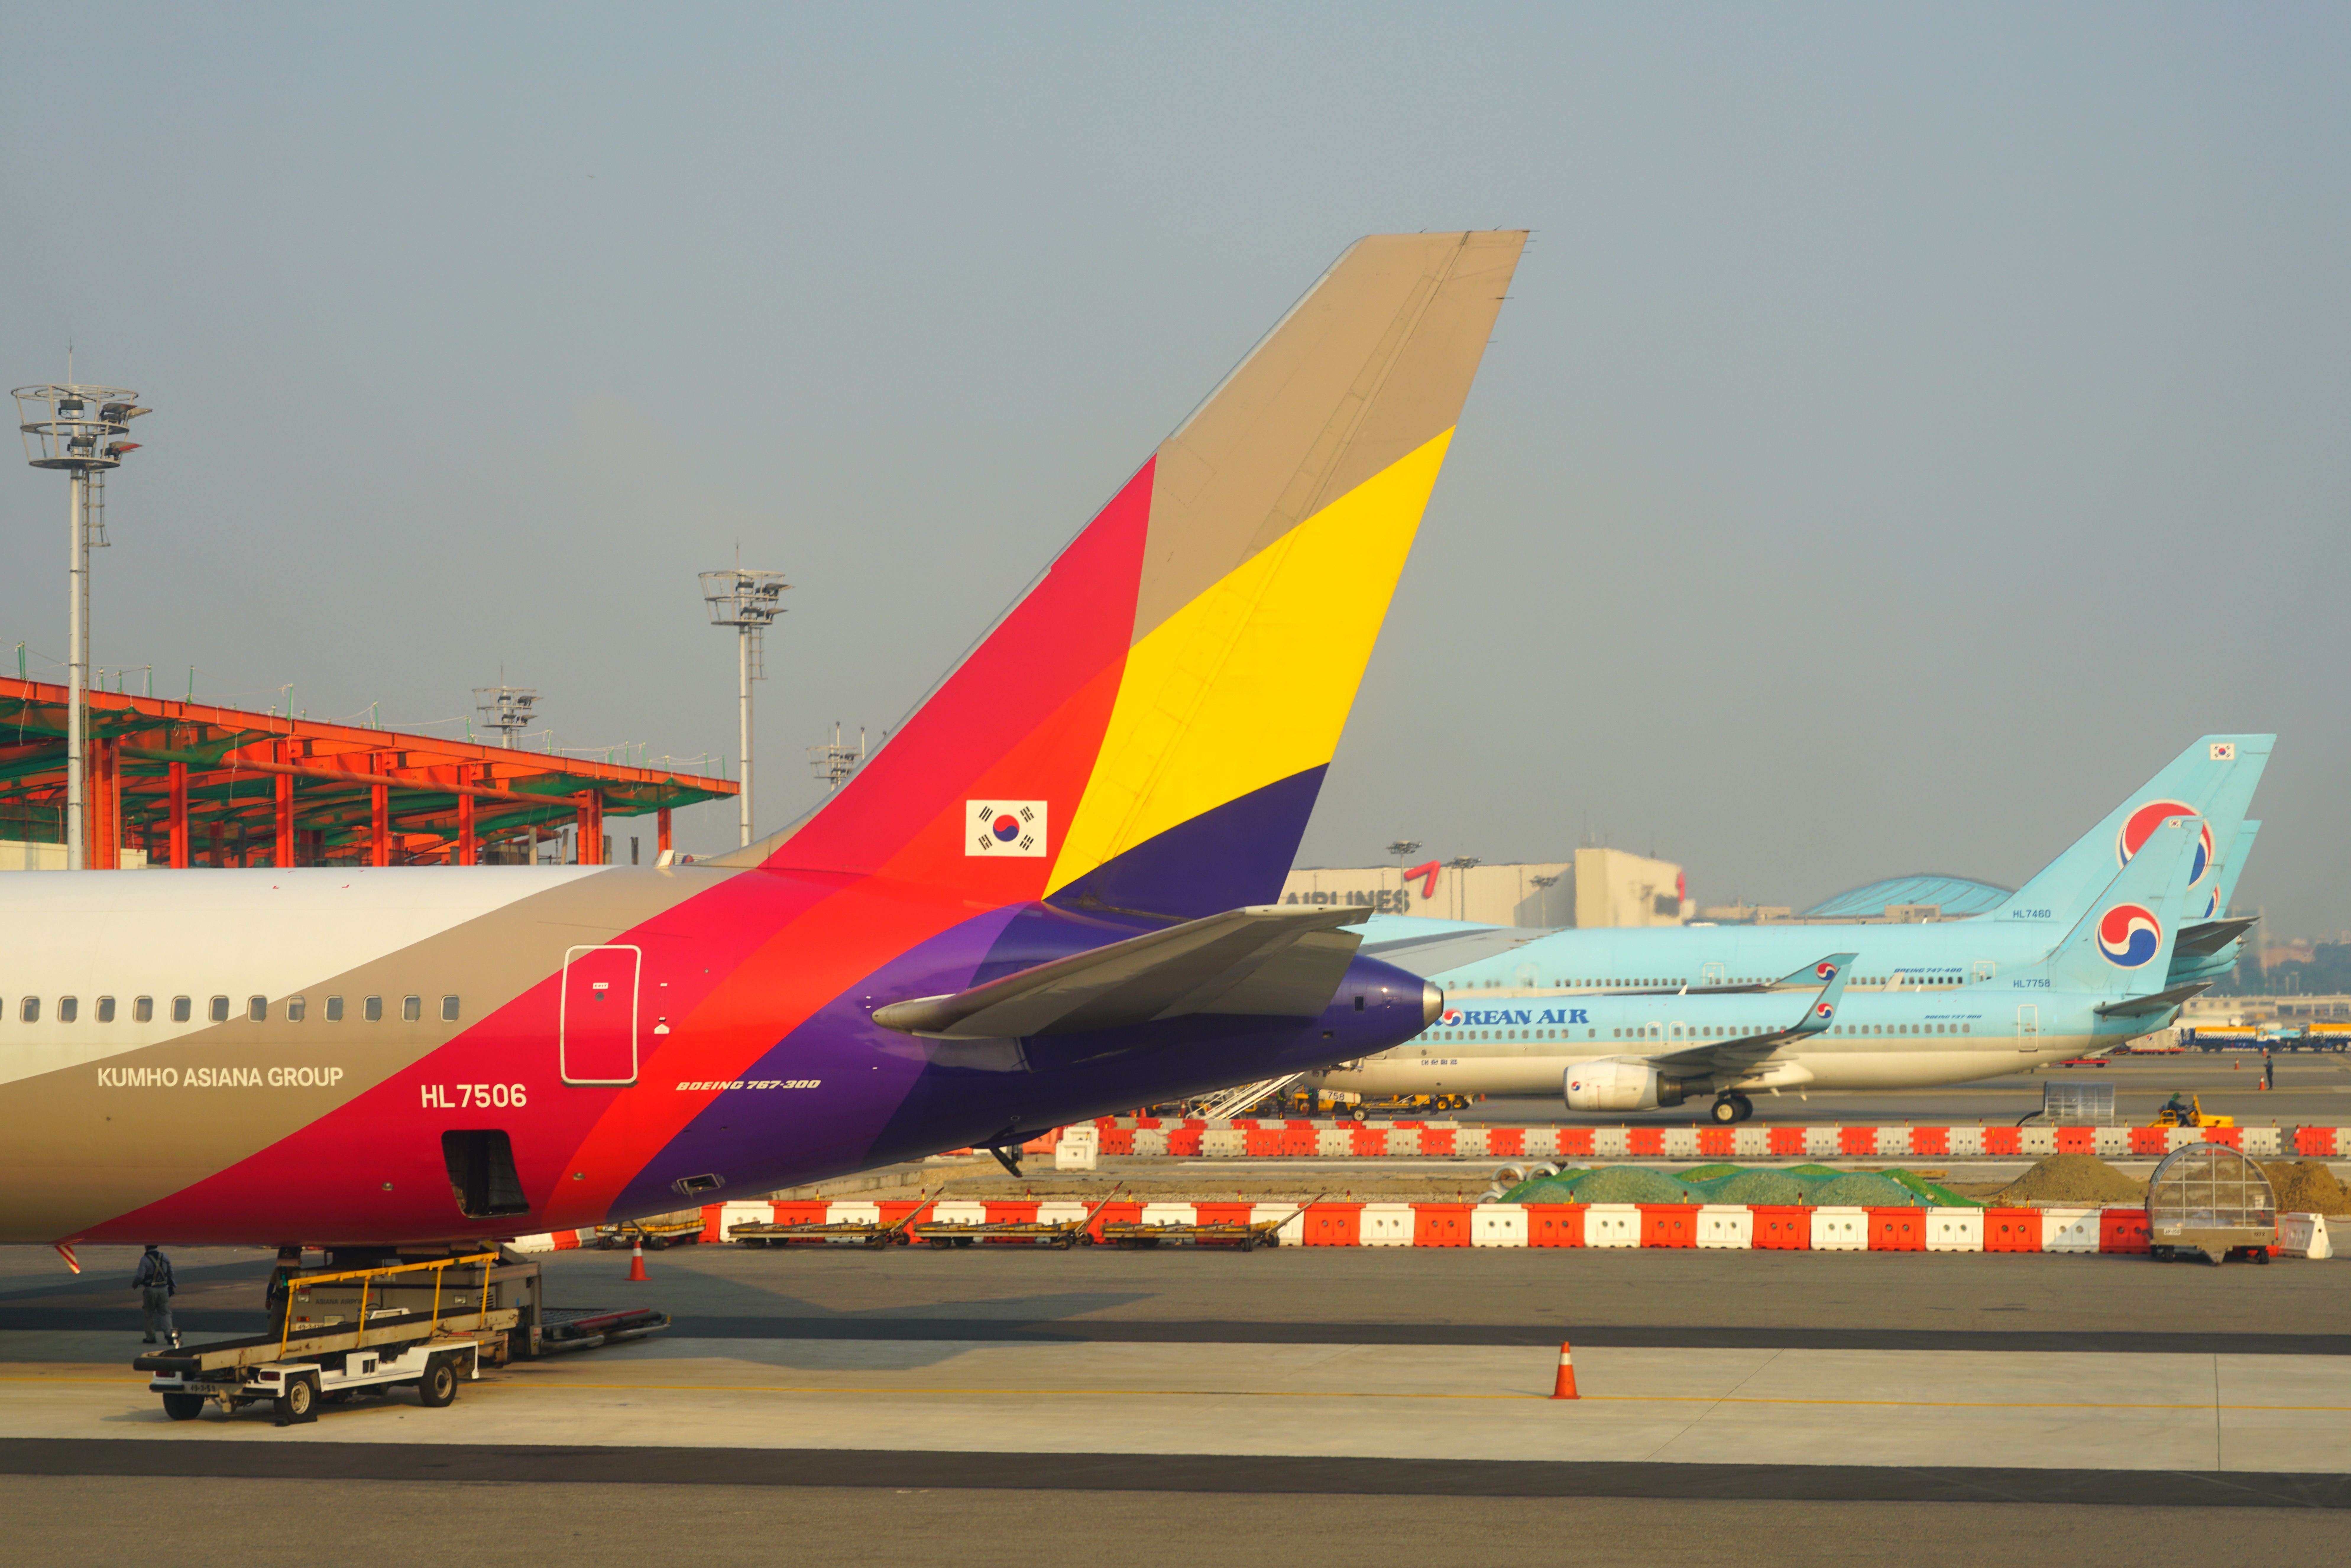 Asiana and Korean air tails